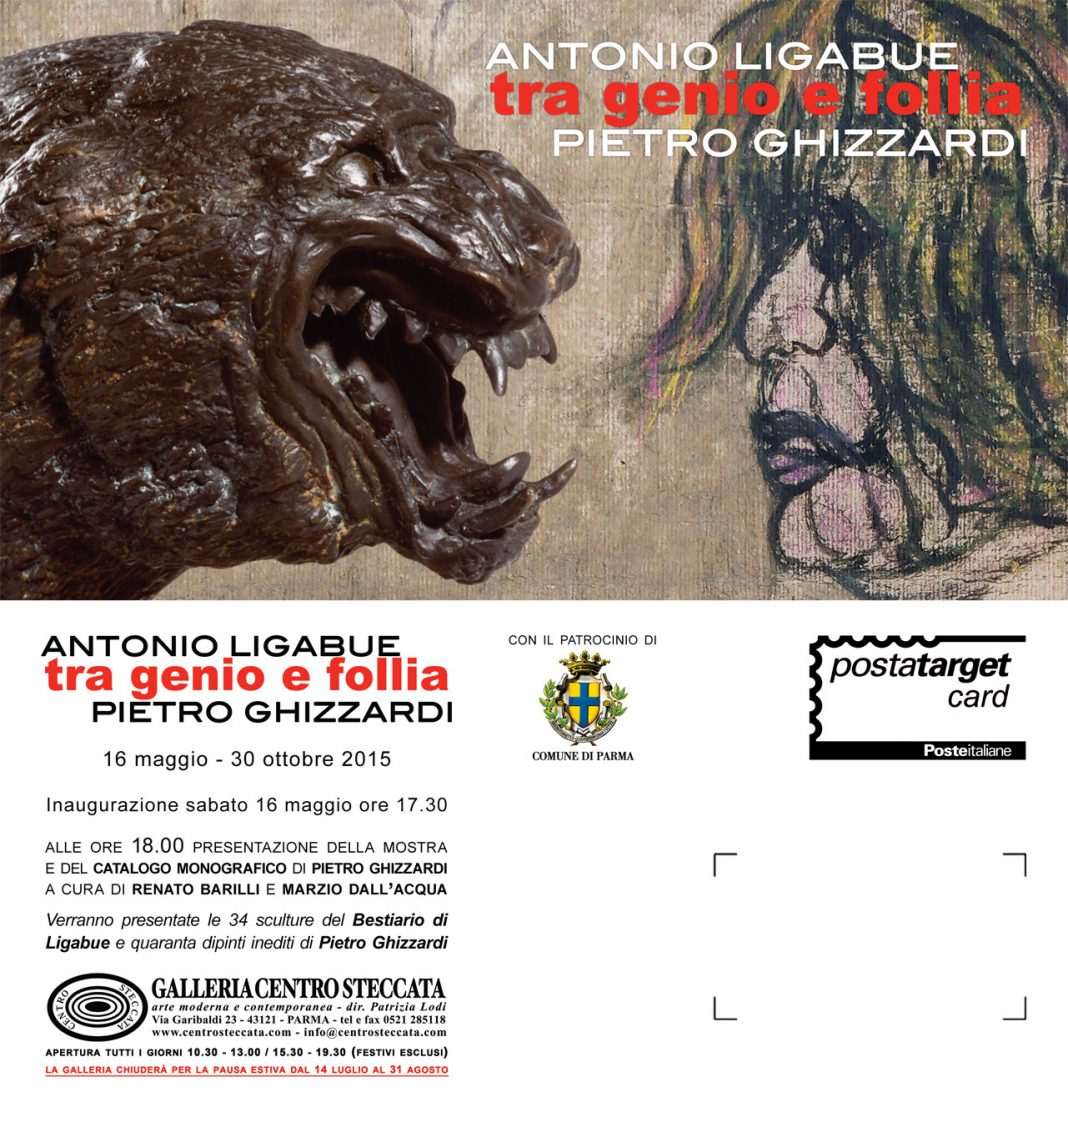 Antonio Ligabue / Pietro Ghizzardi – Tra genio e folliahttps://www.exibart.com/repository/media/eventi/2015/05/antonio-ligabue-pietro-ghizzardi-8211-tra-genio-e-follia-1-1068x1127.jpg